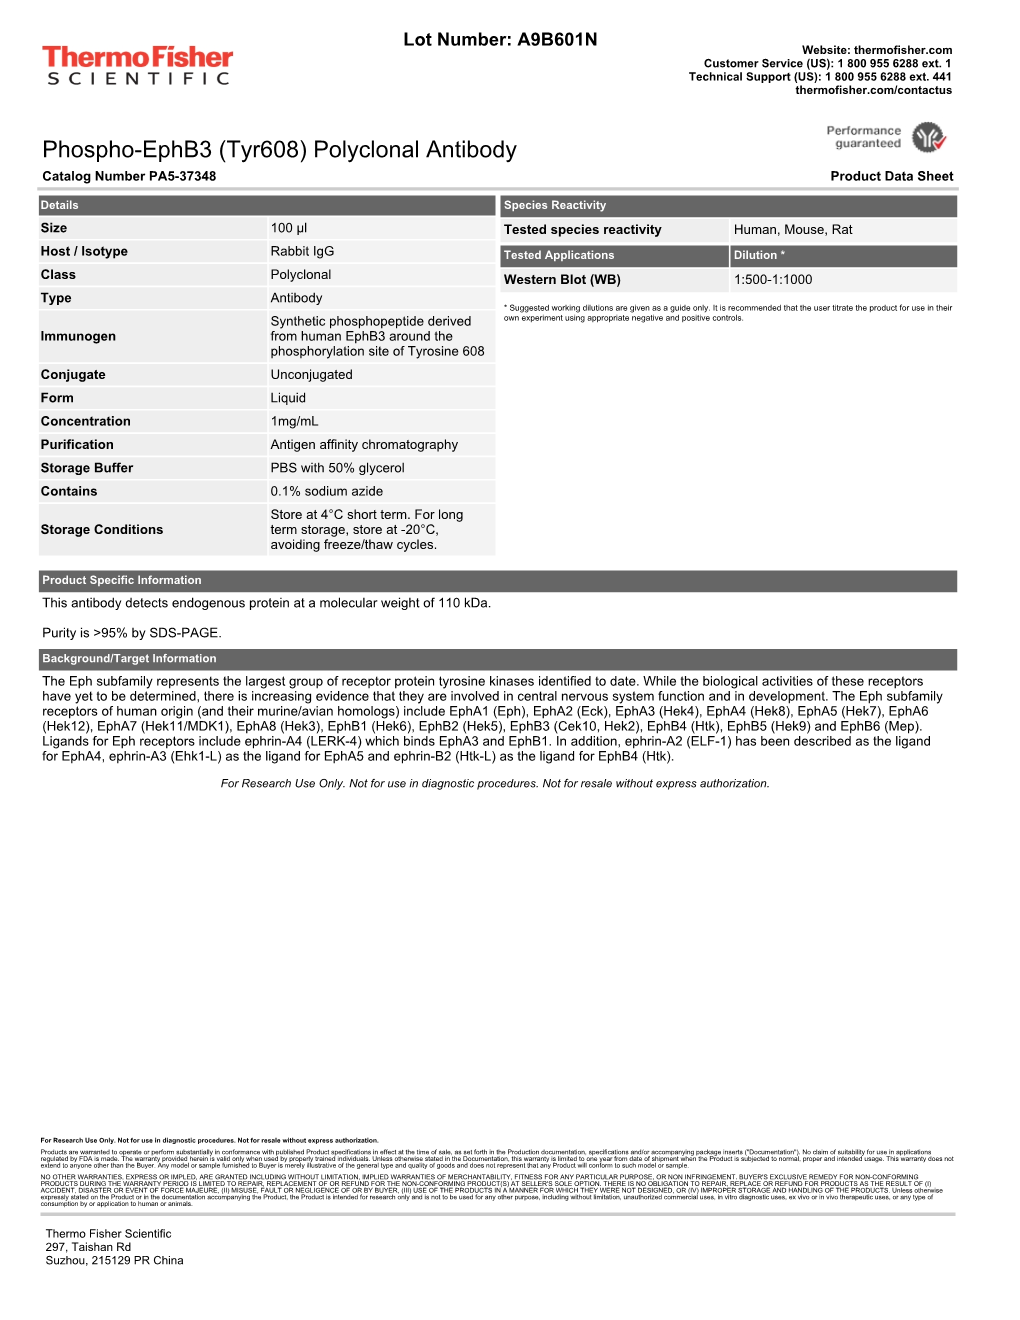 Phospho-Ephb3 (Tyr608) Polyclonal Antibody Catalog Number PA5-37348 Product Data Sheet